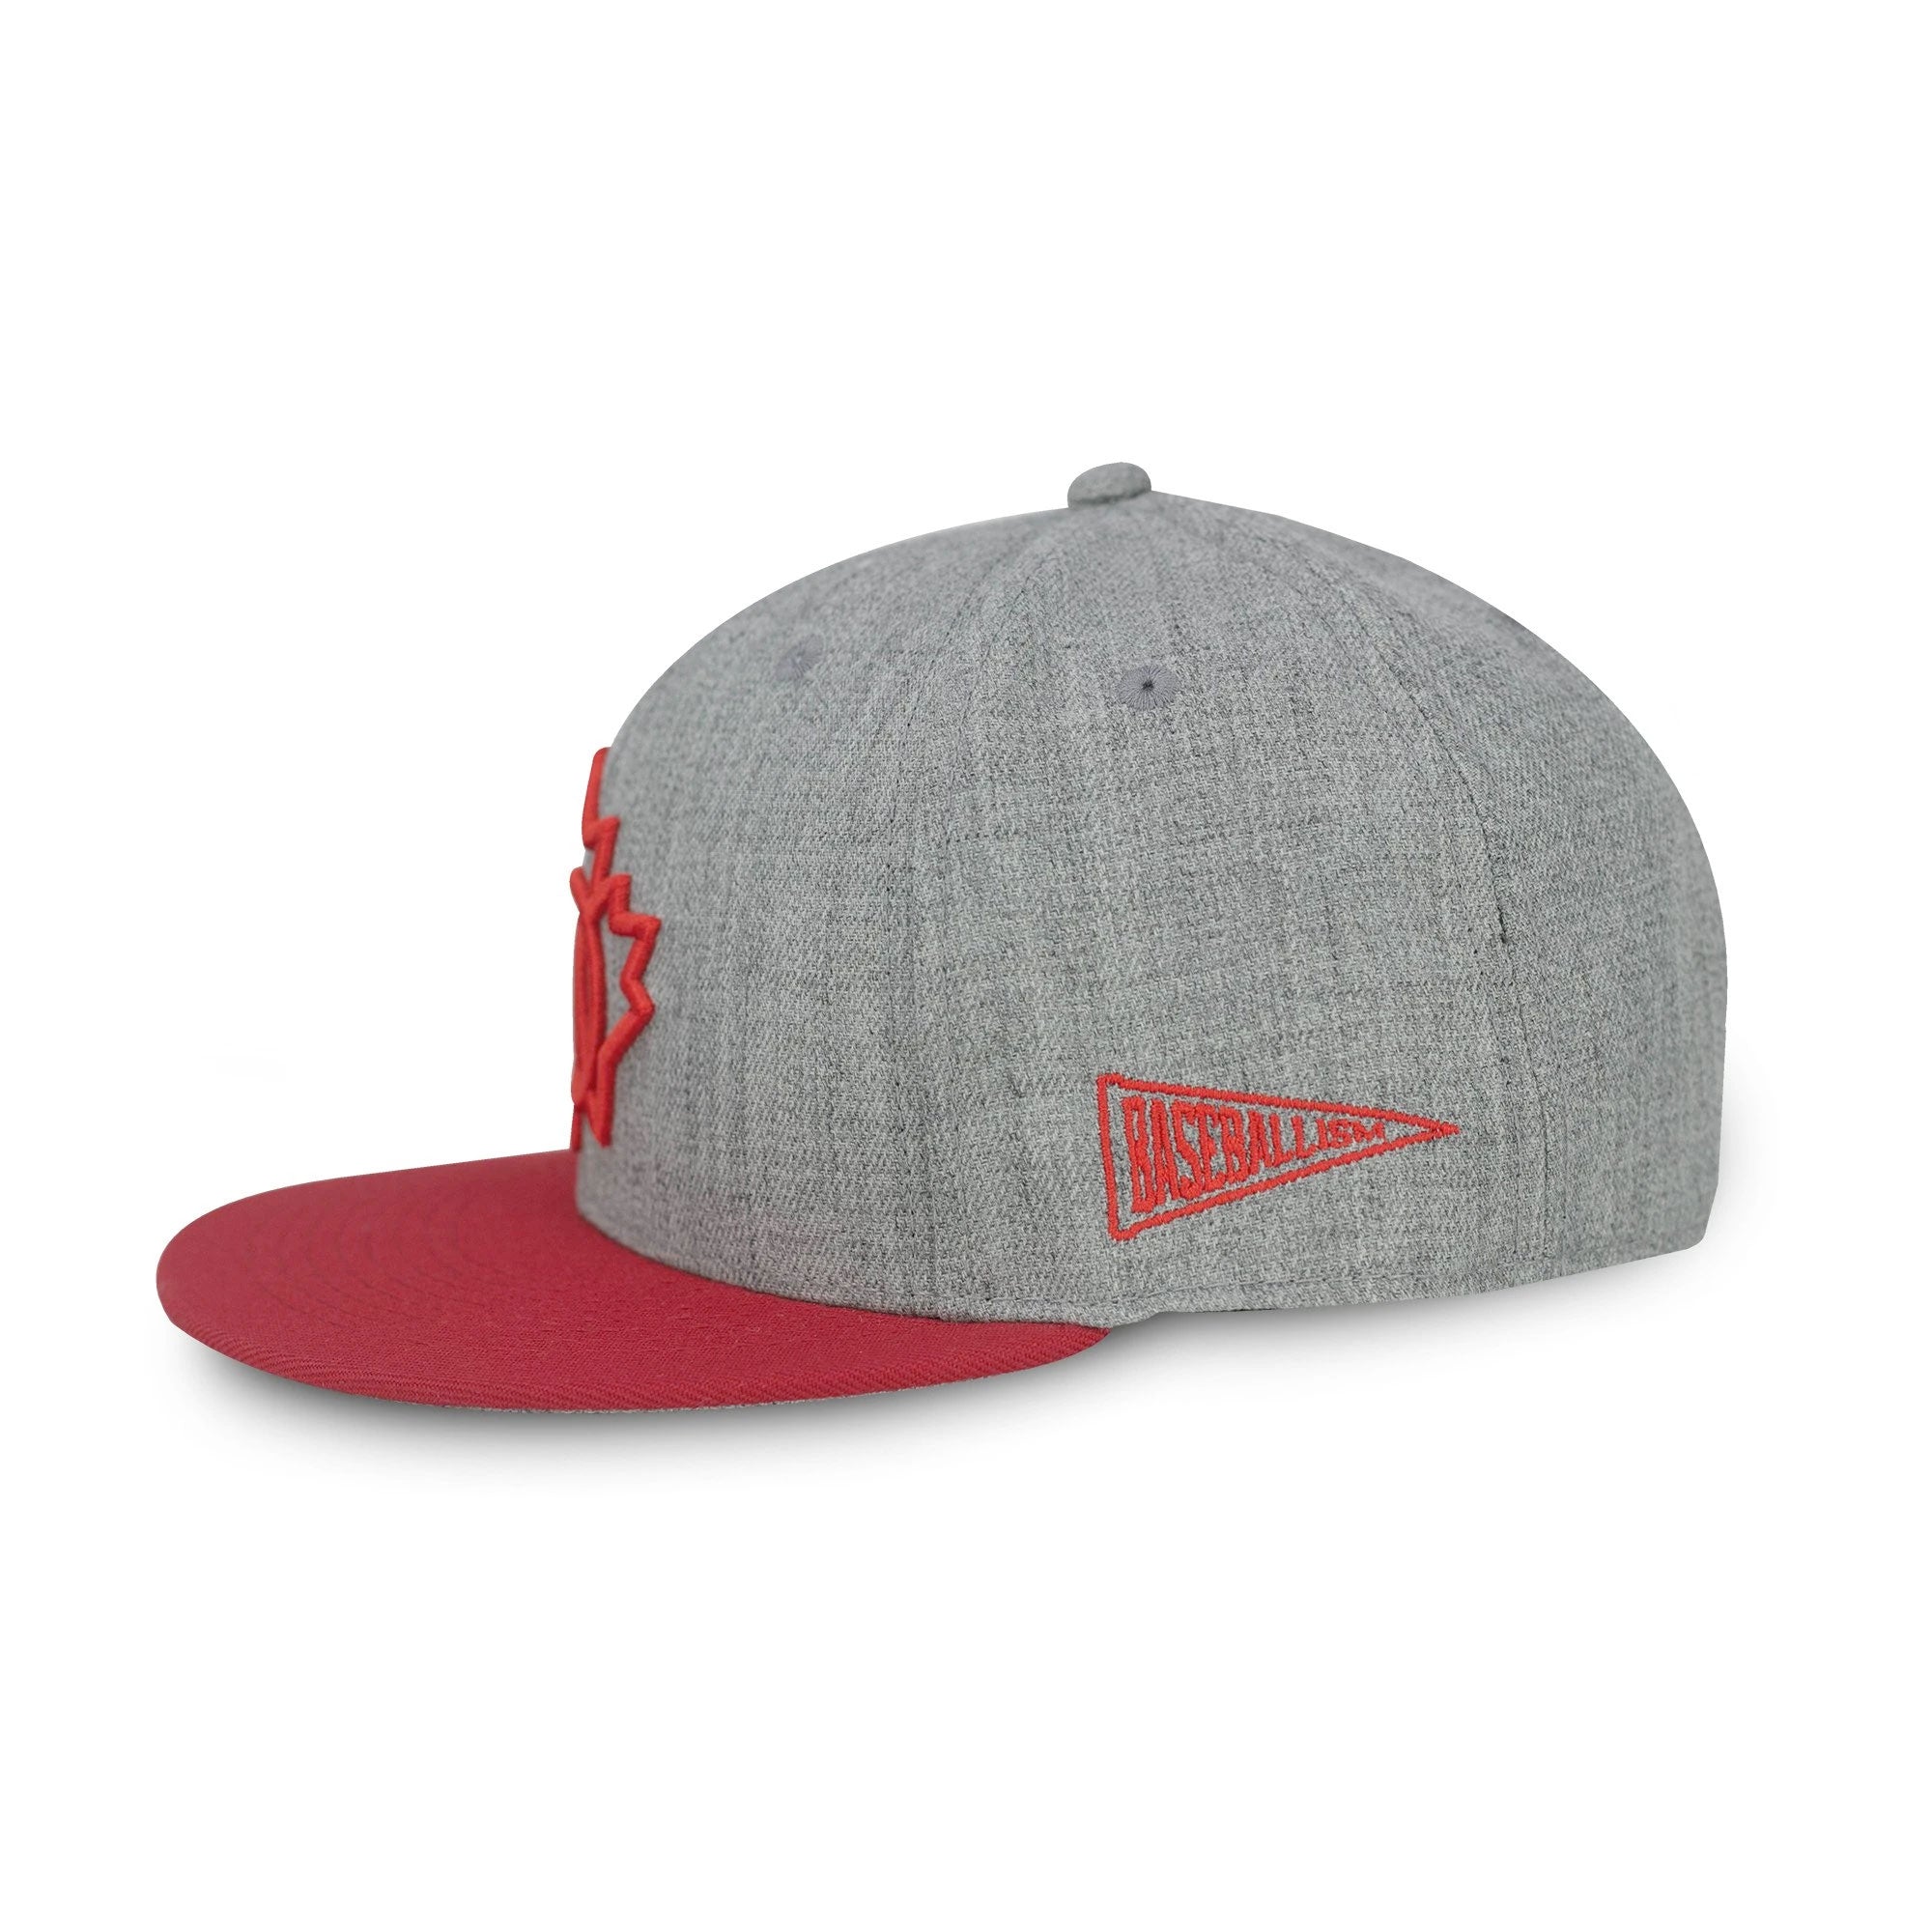 Baseballism Canada Snapback Hat